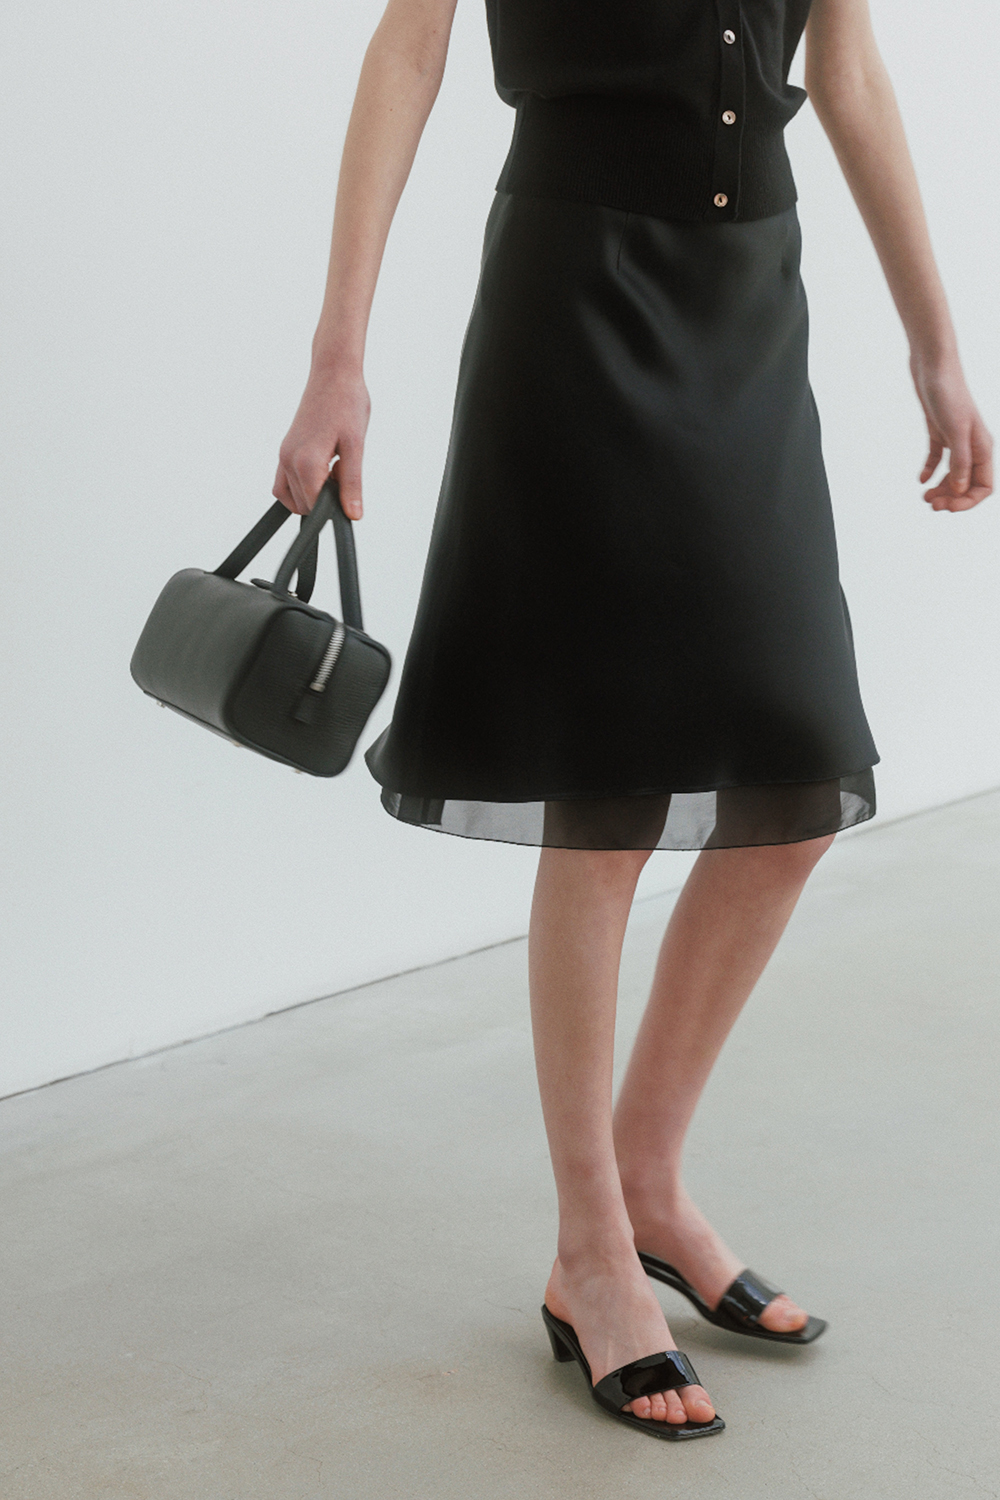 [REORDER] Satin Layered Skirt in Black